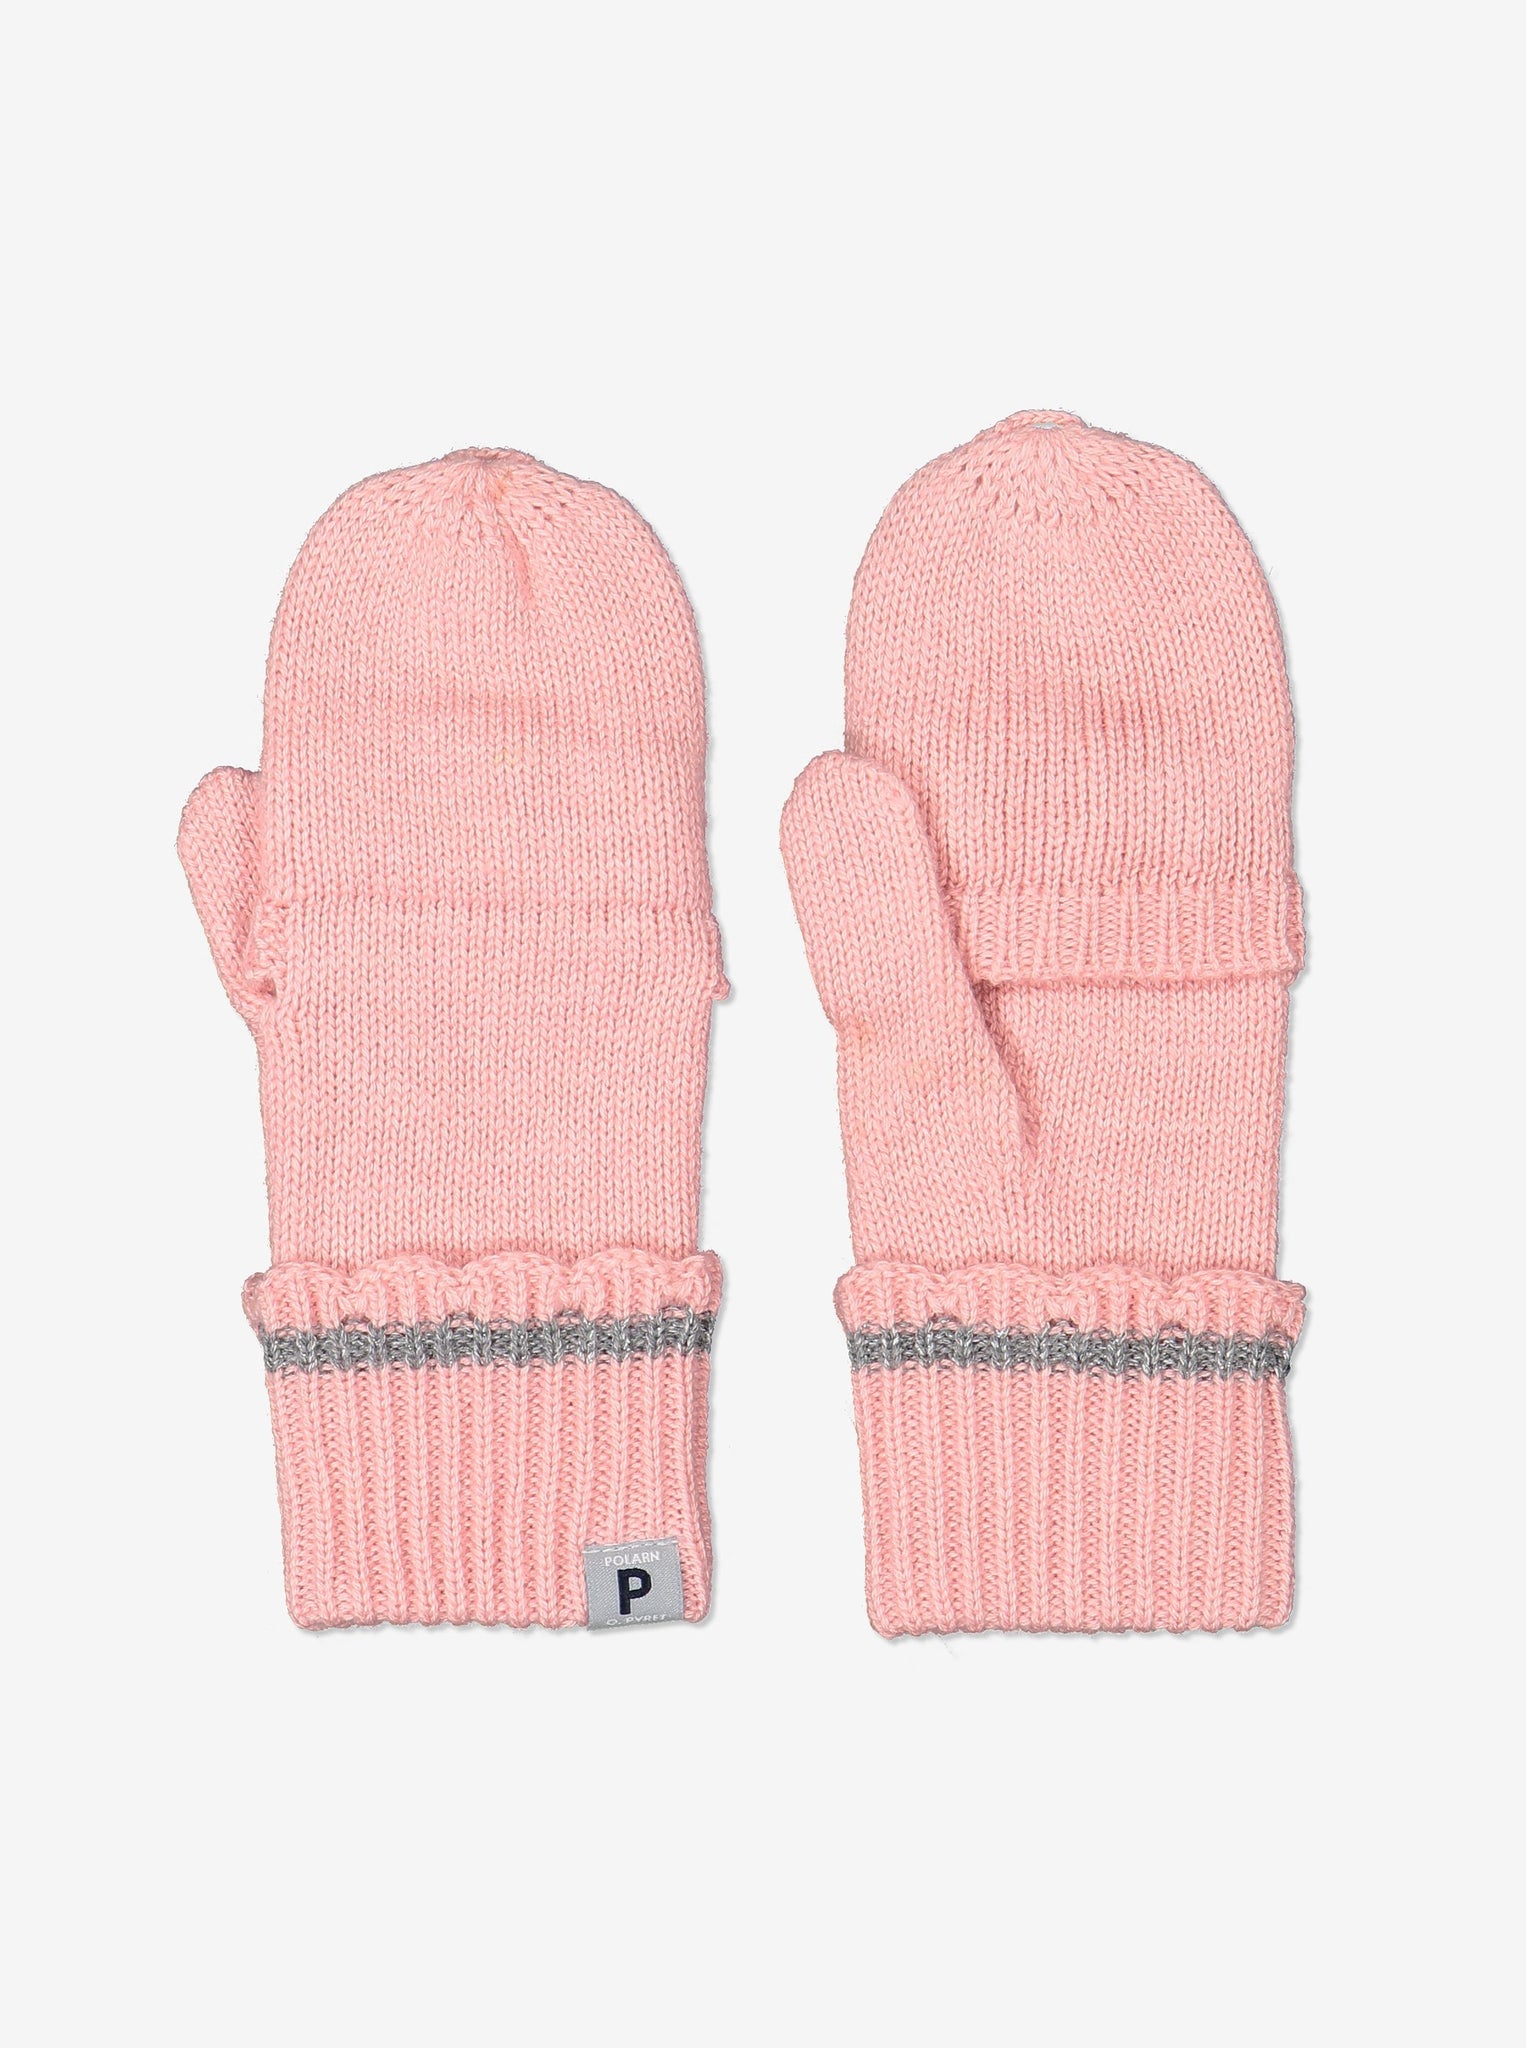 Kids Pink Flip-Top Gloves